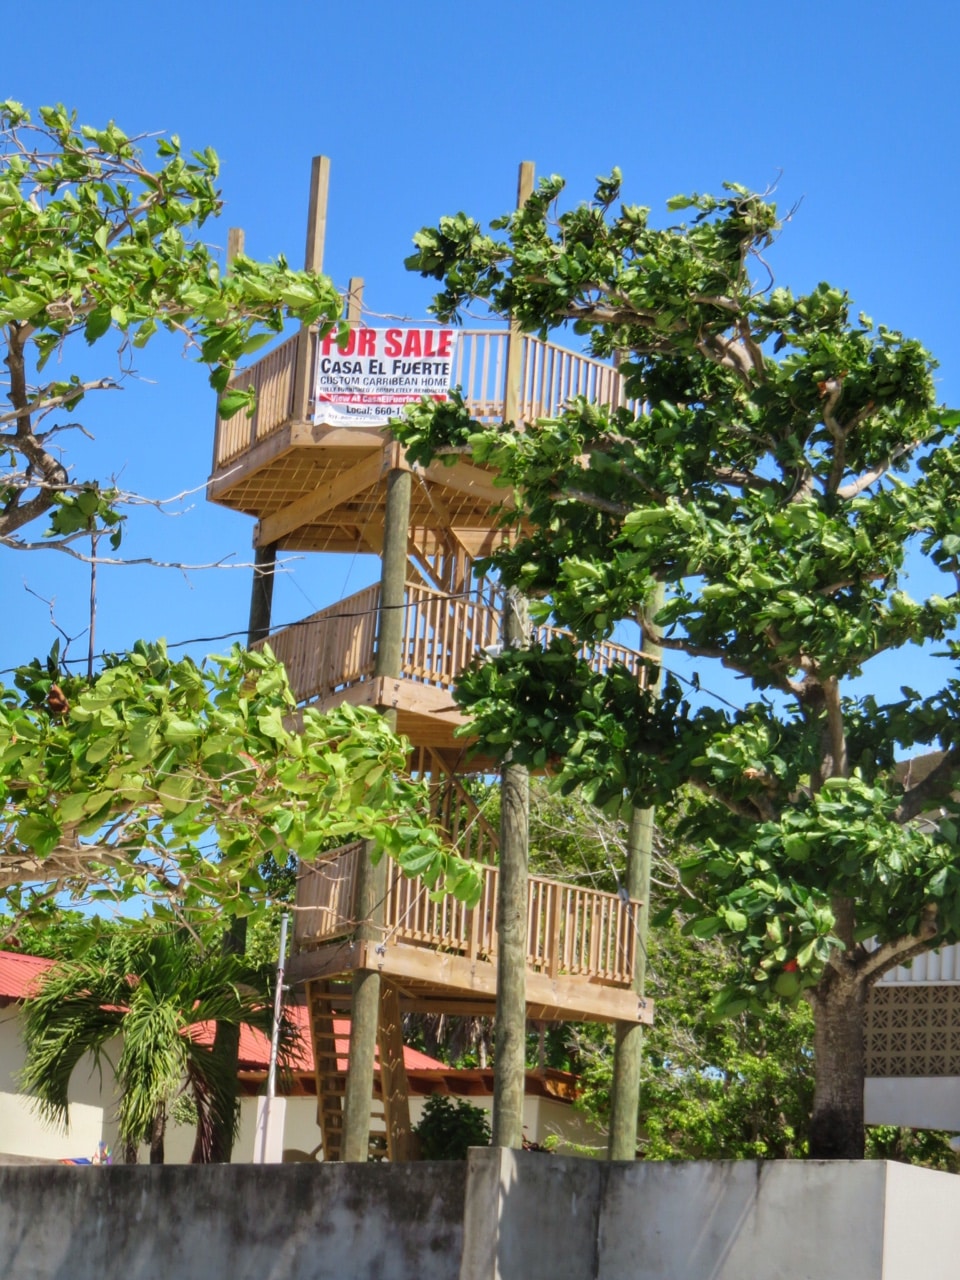 For Sale, Casa el Fuerte, San Pedro Belize